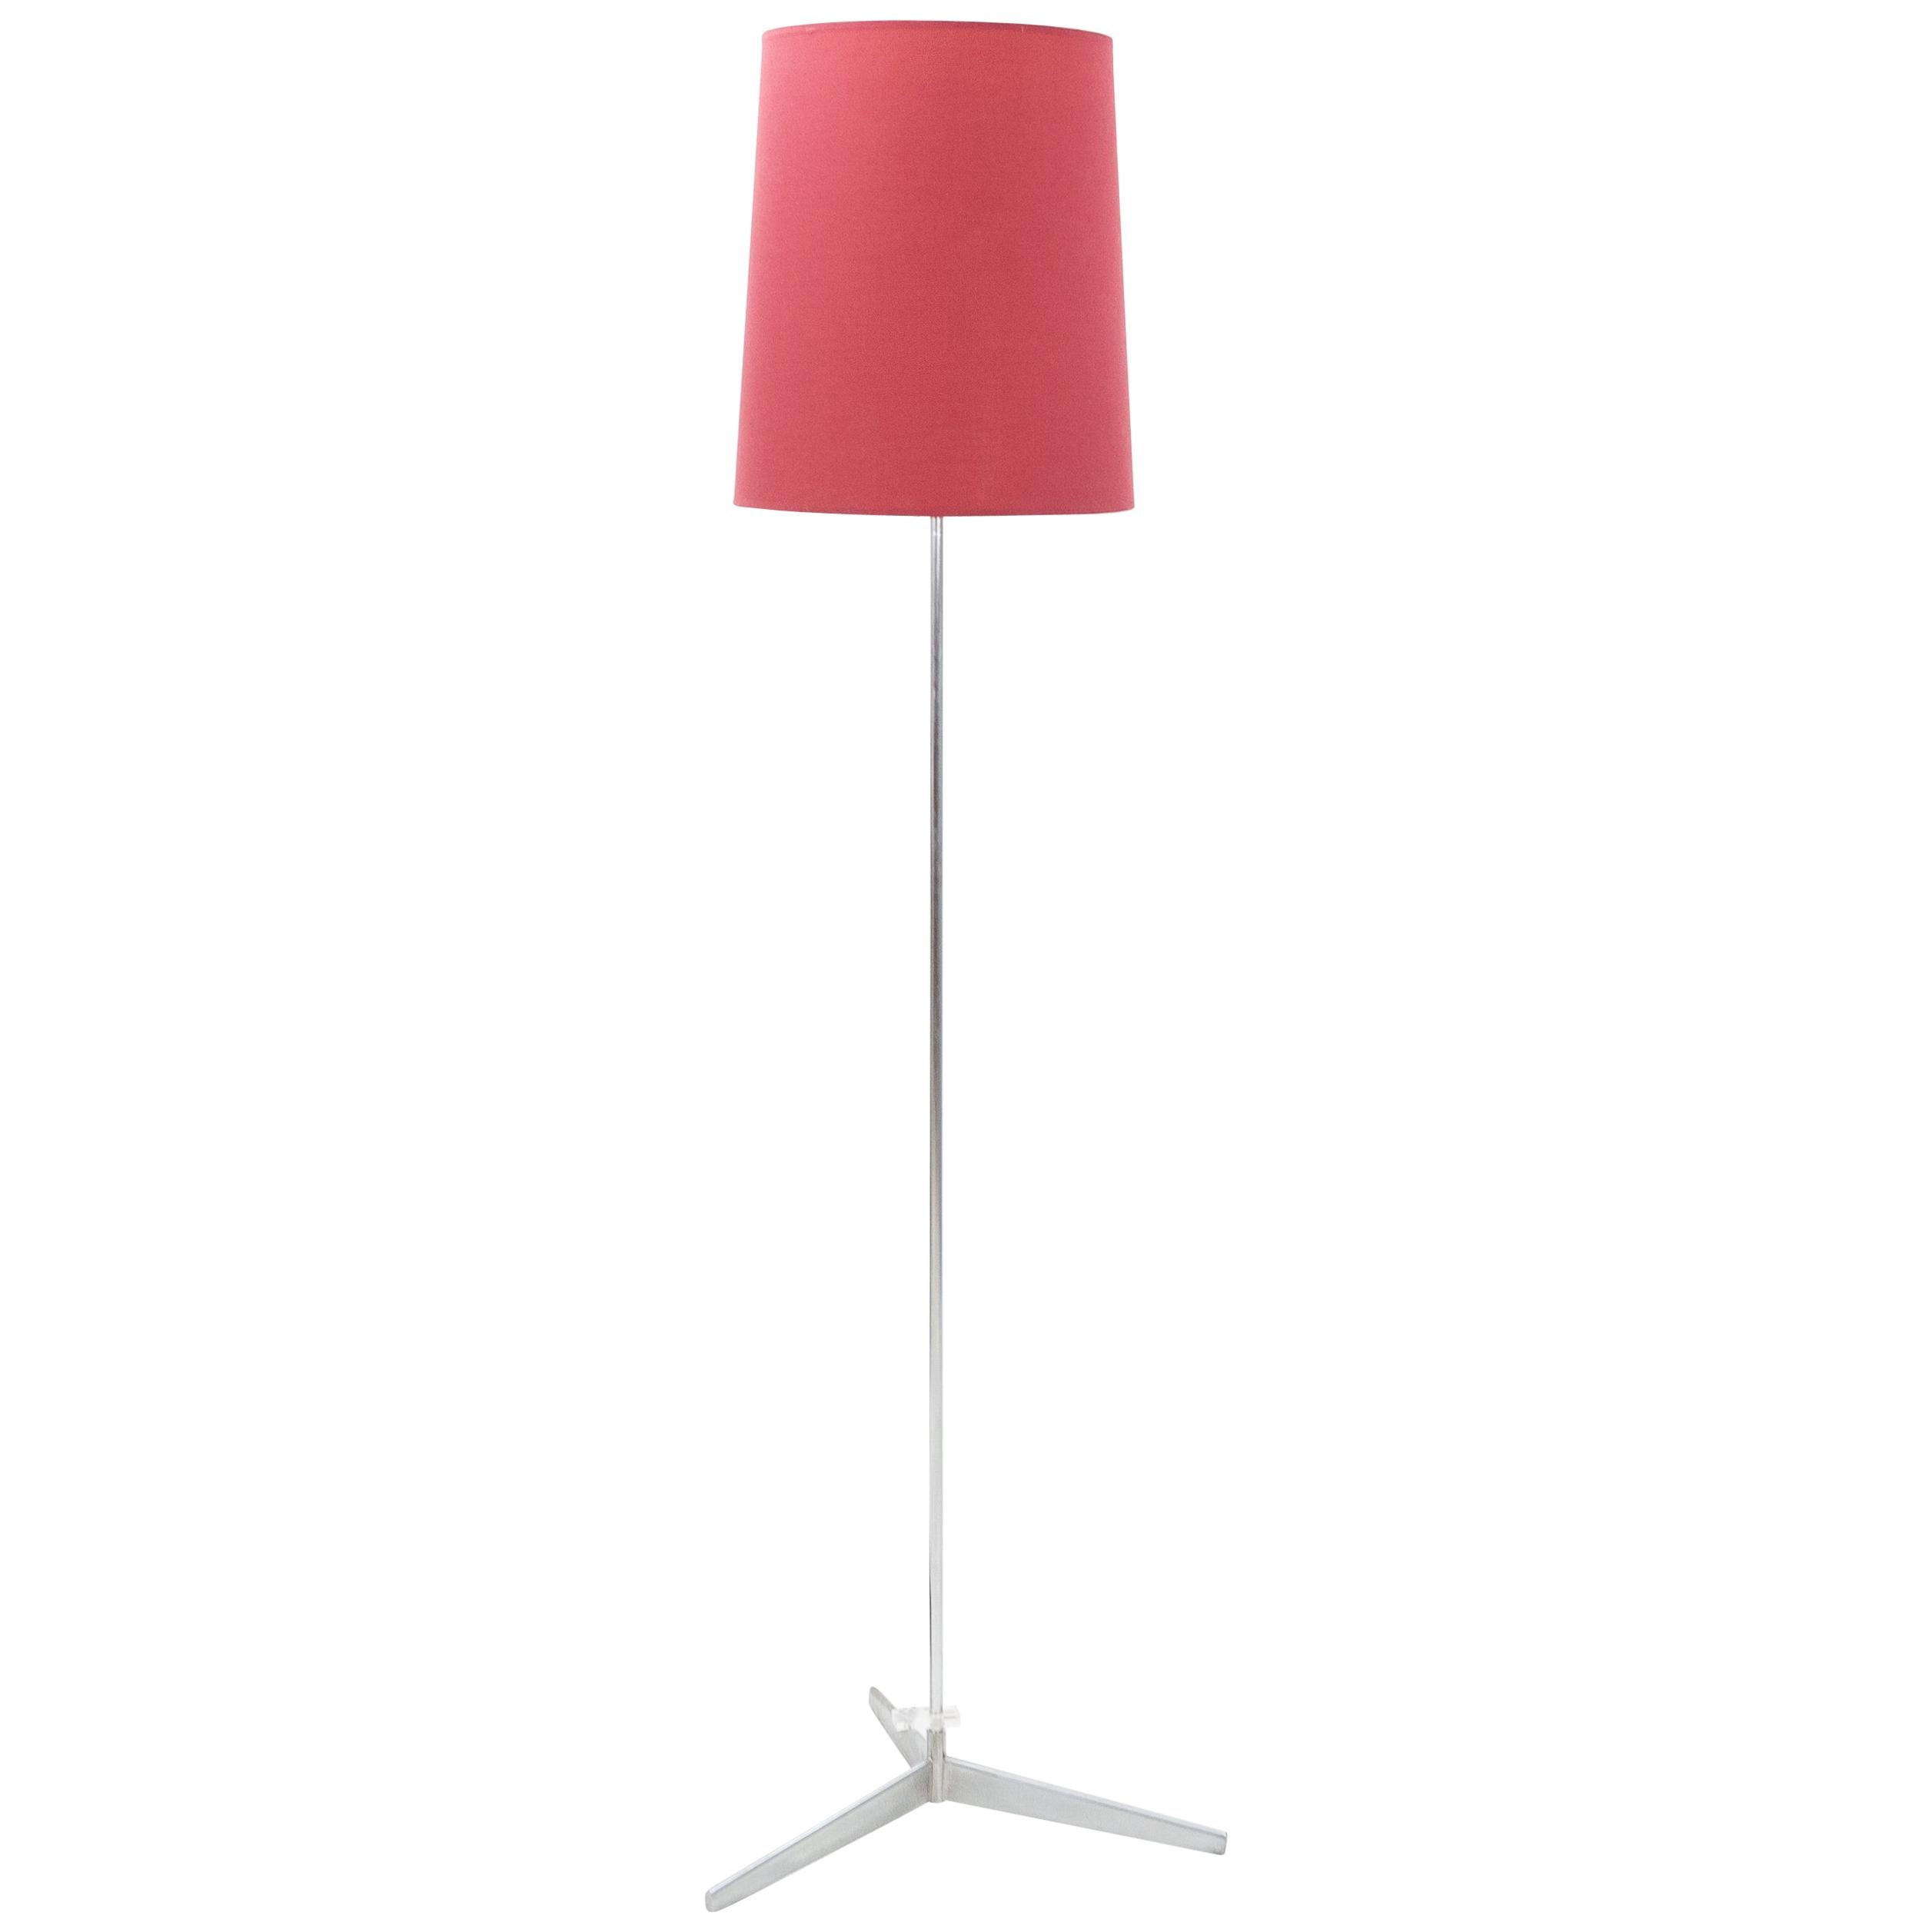 Gepo Amsterdam Floor Lamp